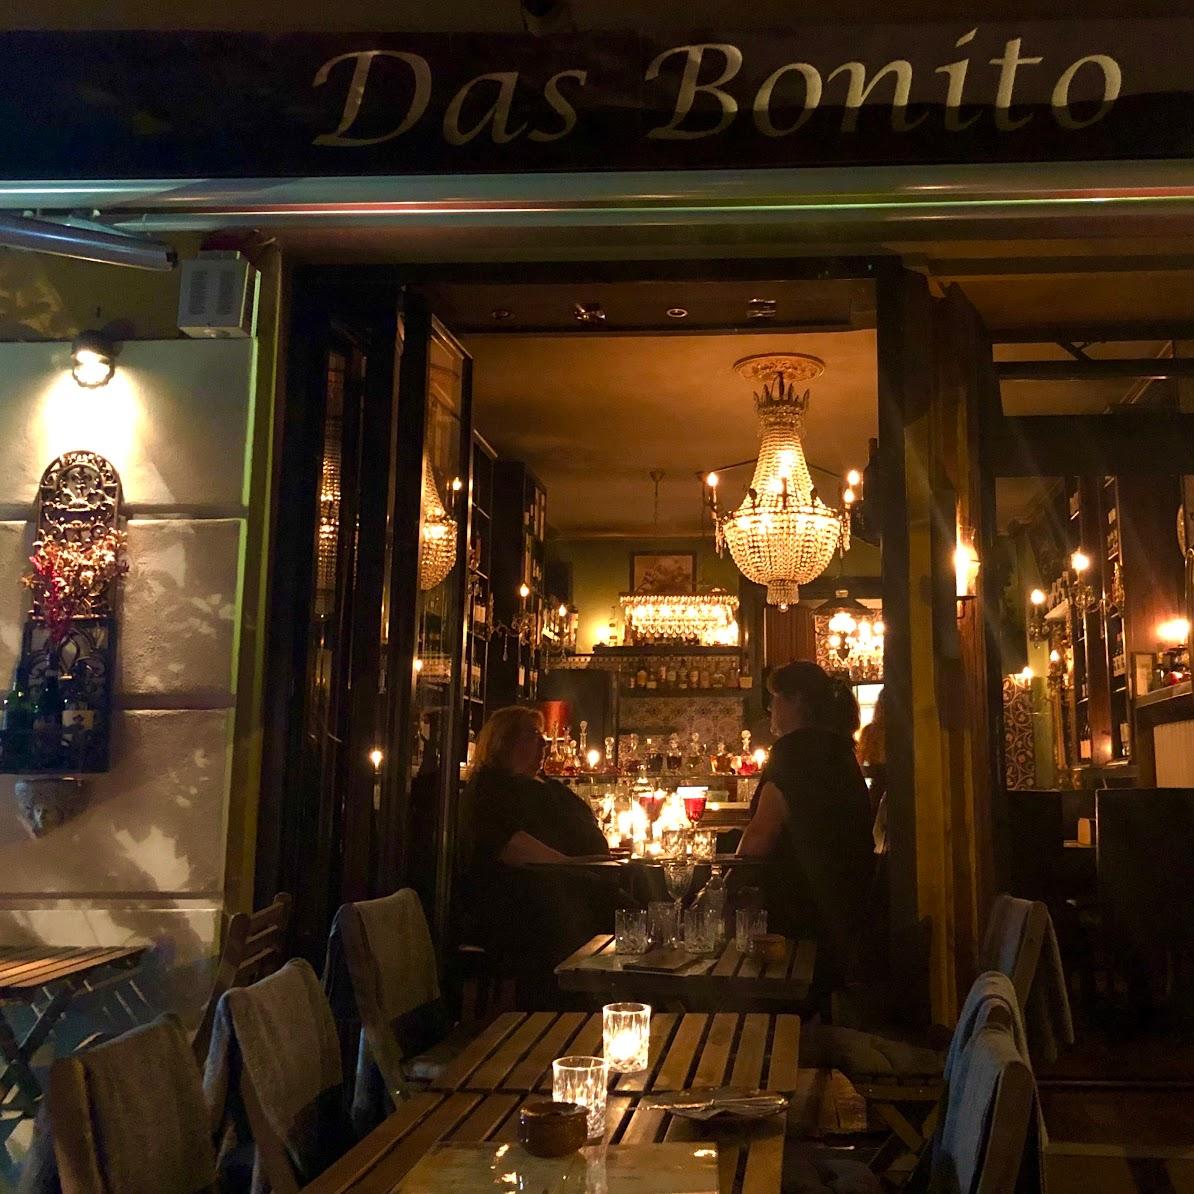 Restaurant "Tapasbar Bonito" in Berlin